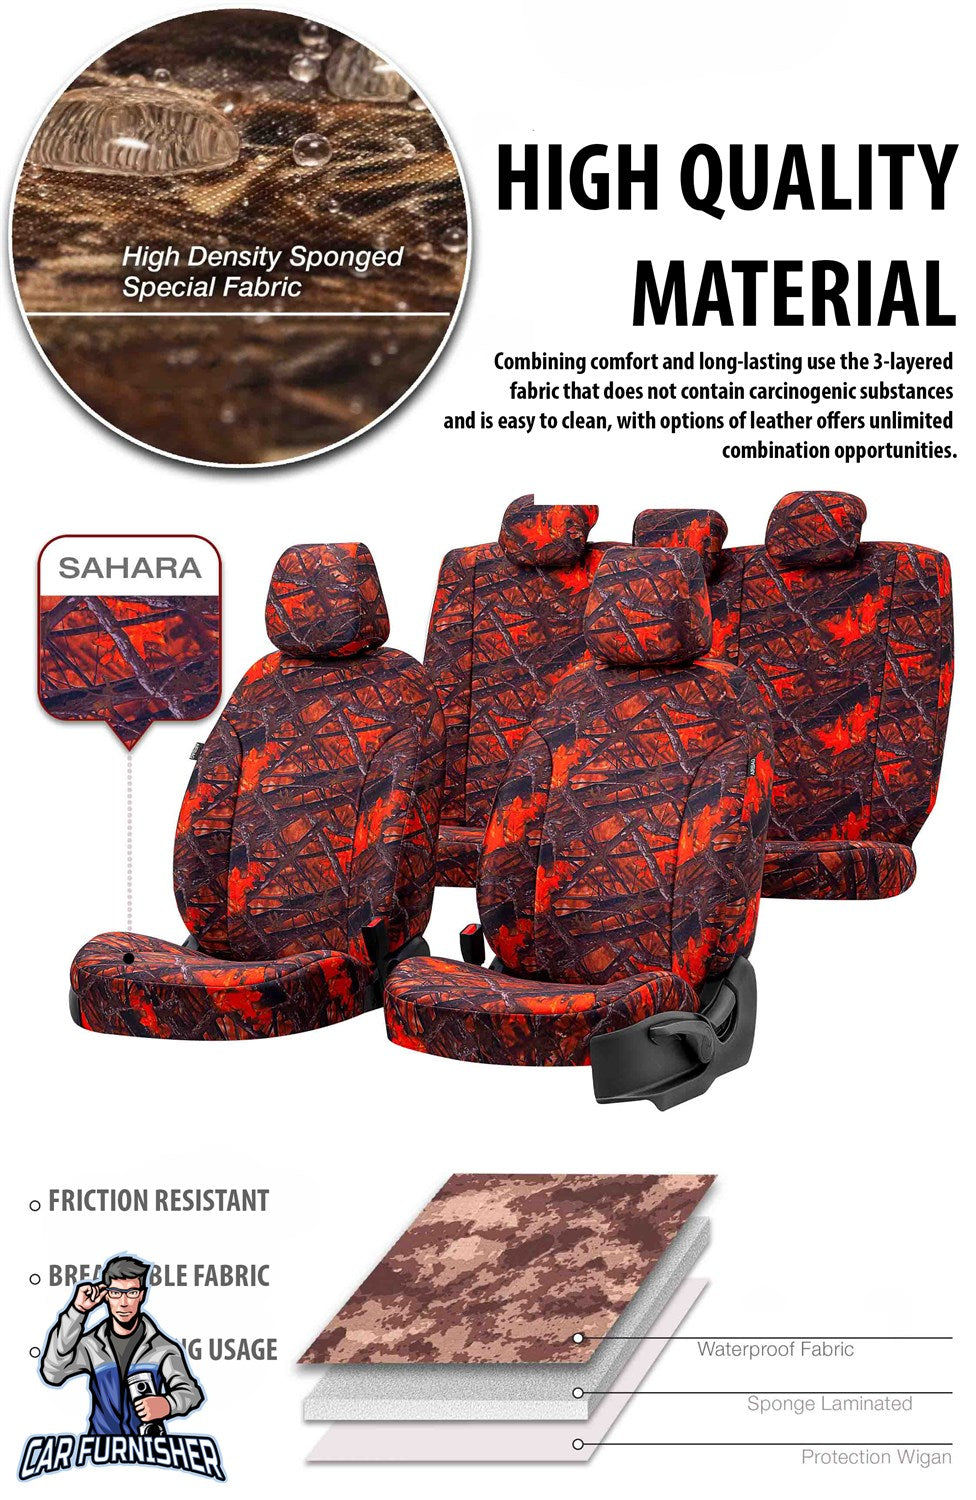 Daihatsu Materia Seat Covers Camouflage Waterproof Design Alps Camo Waterproof Fabric